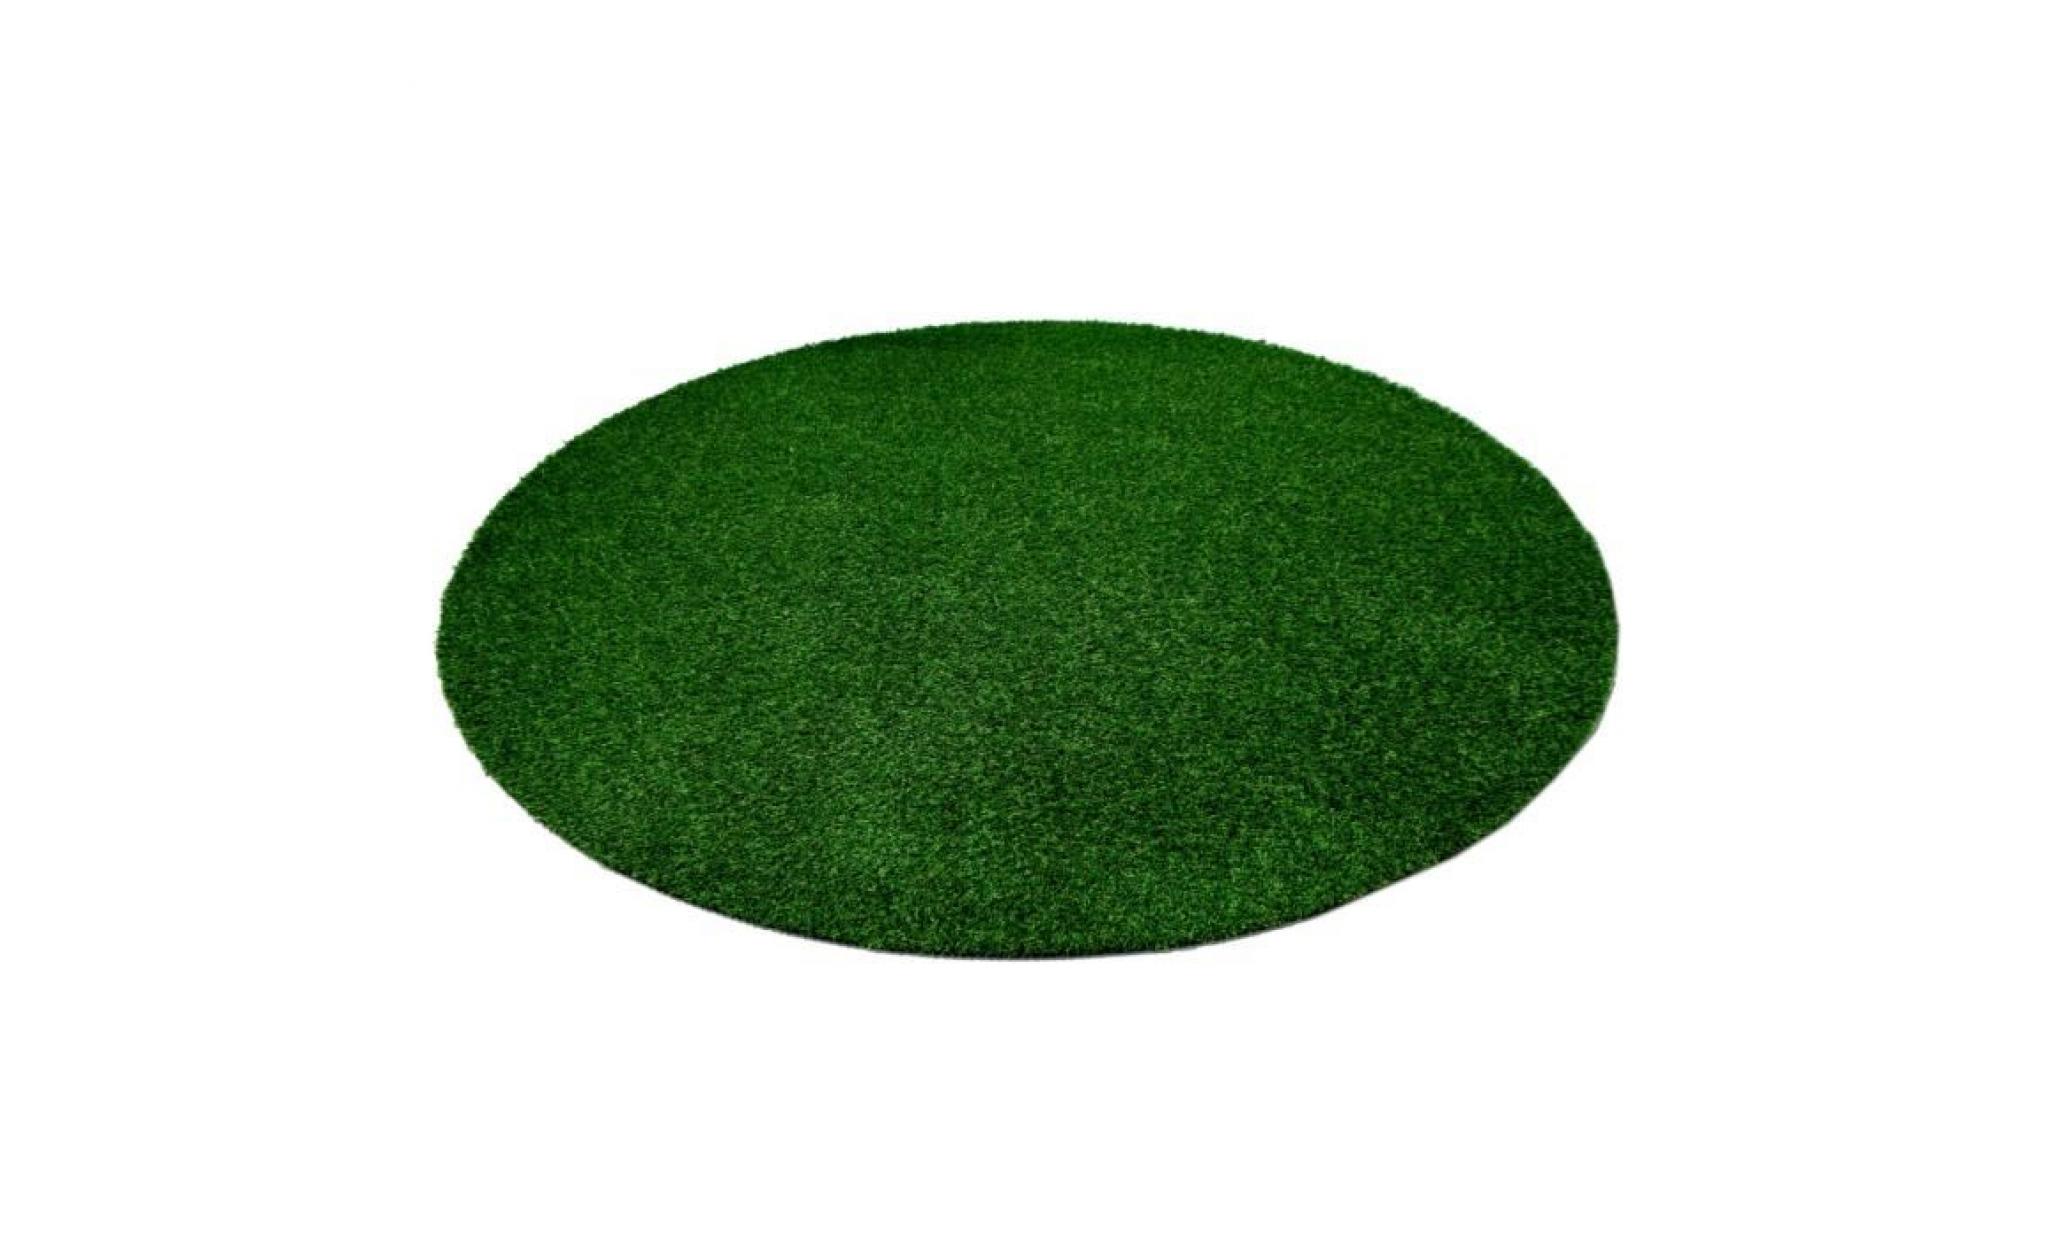 chelsea   tapis type luxe gazon artificiel rond – pour jardin, terrasse, balcon   vert   [133 cm rond]